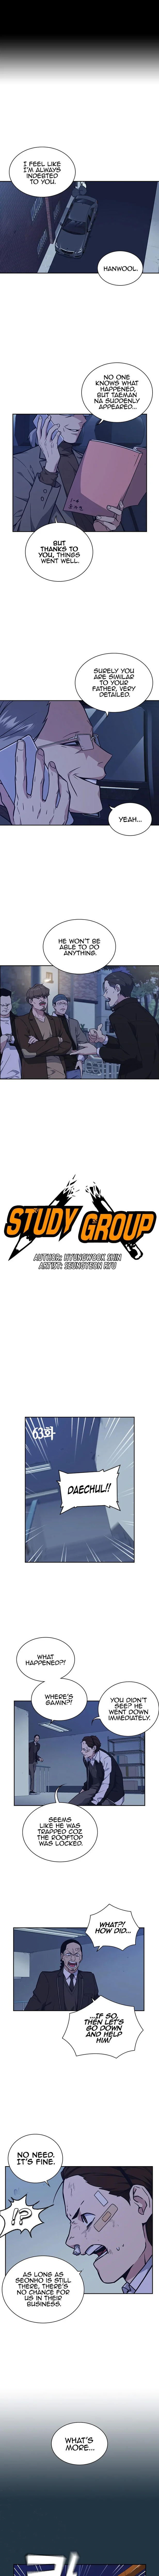 study-group-chap-63-0